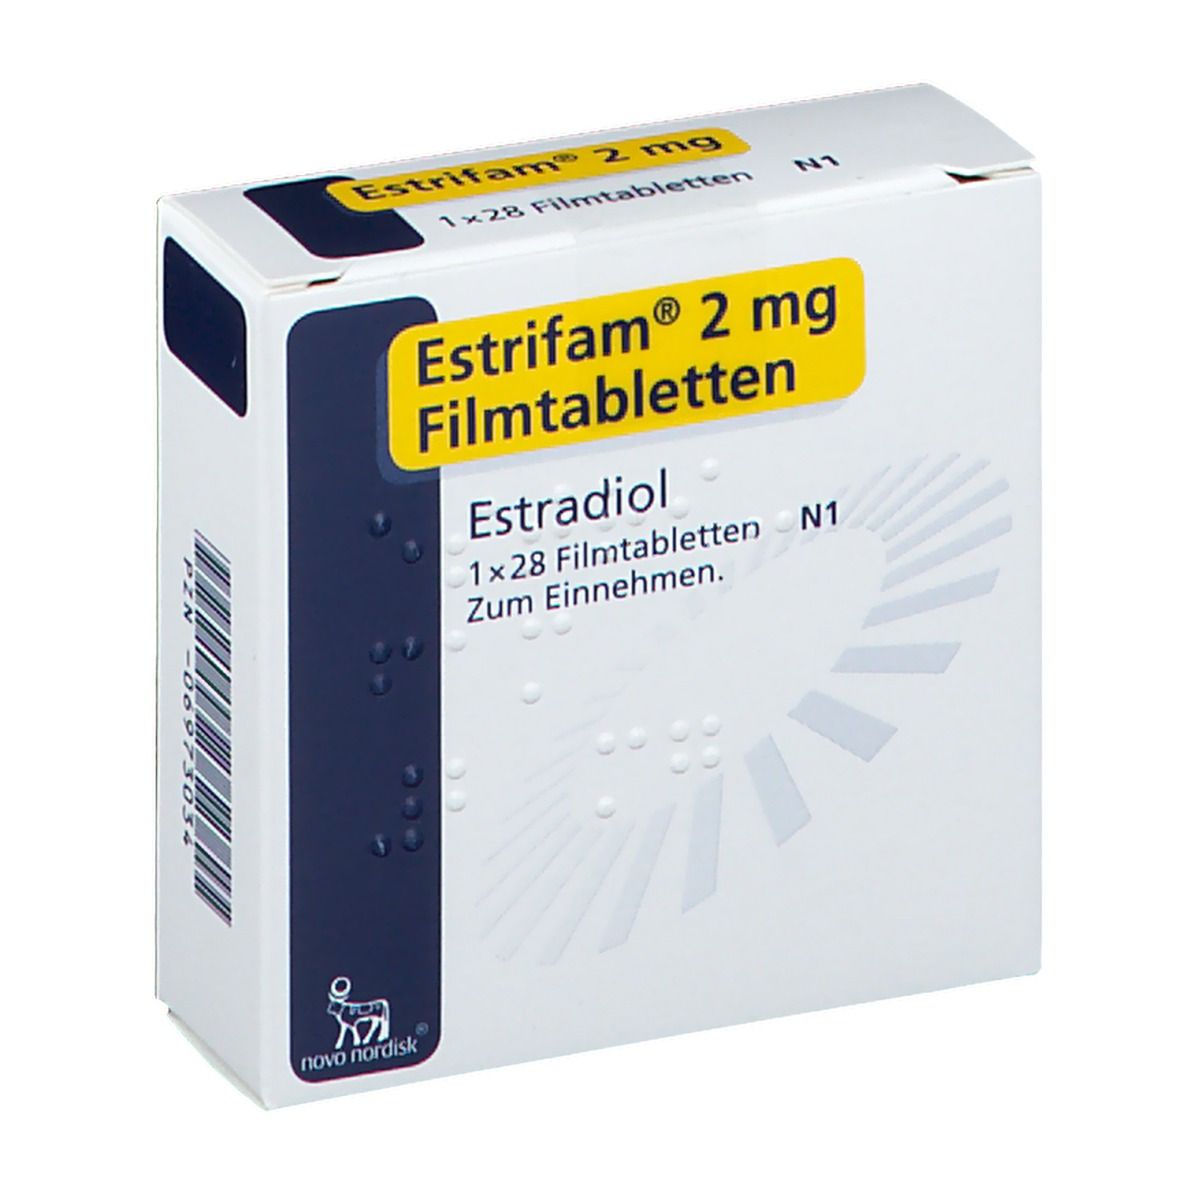 Estrifam® 2 mg